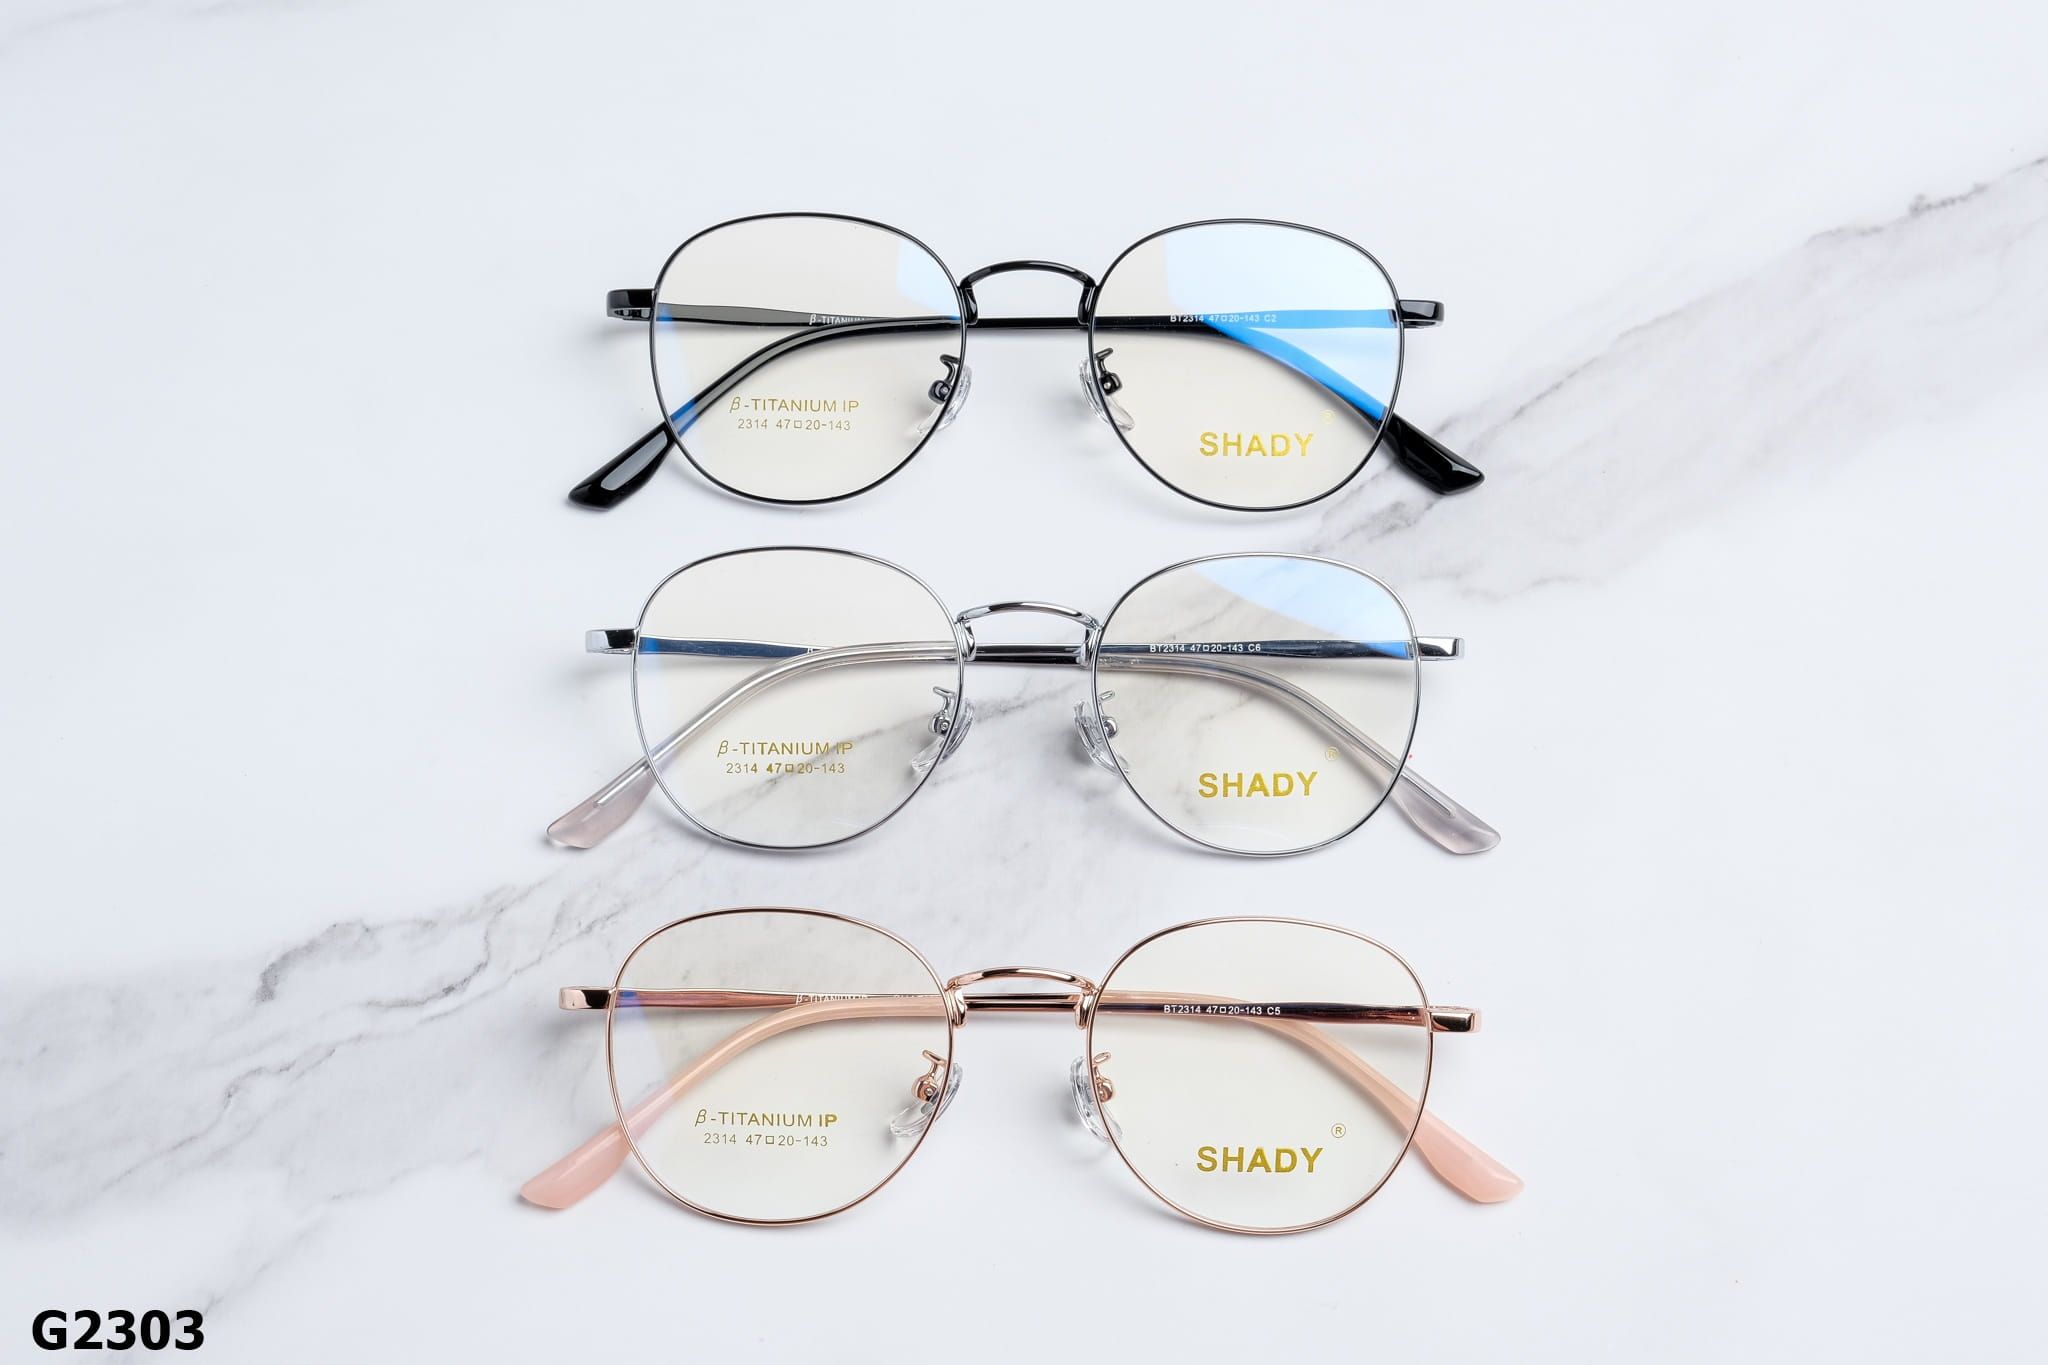  SHADY Eyewear - Glasses - G2303 